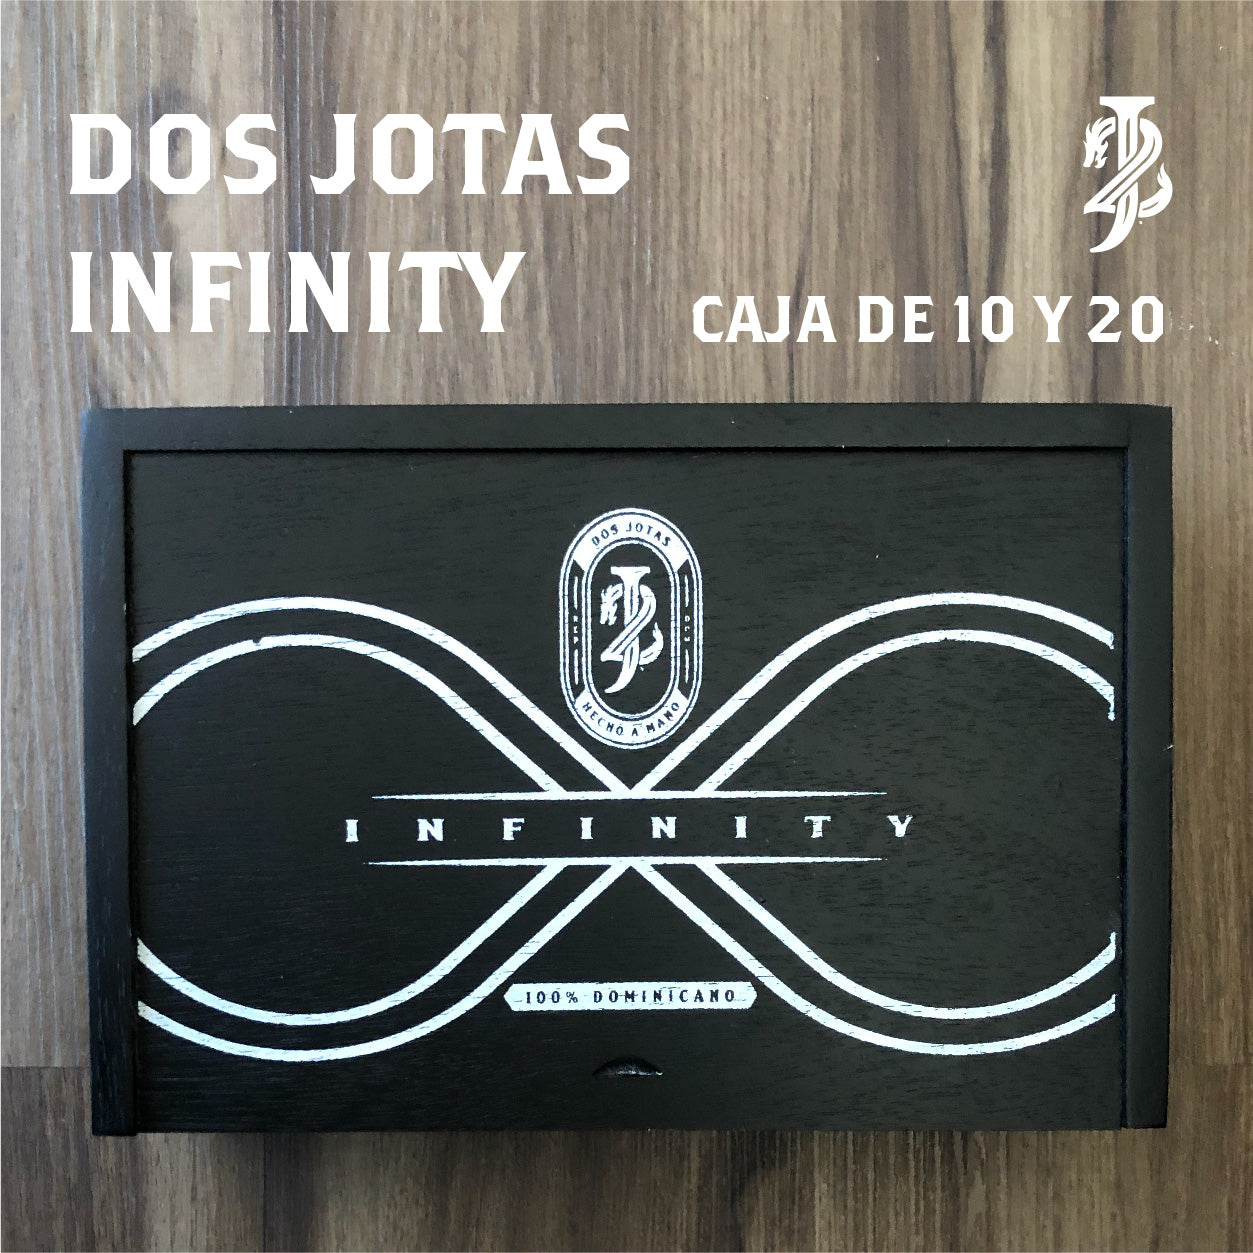 Infinity Dos Jotas - Robusto